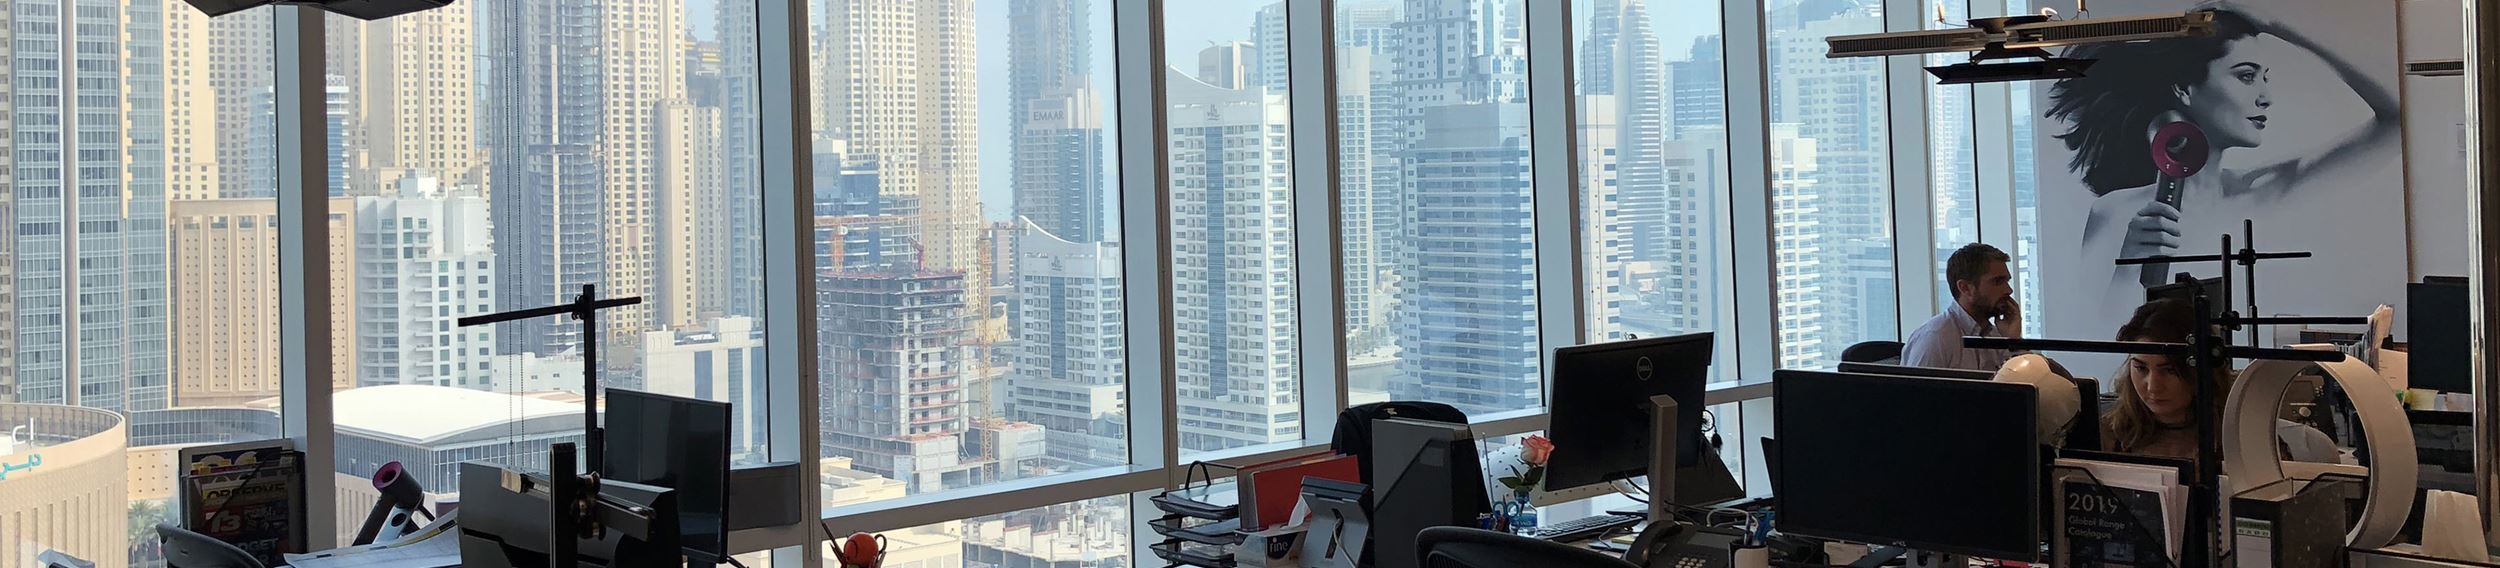 Dyson UAE office